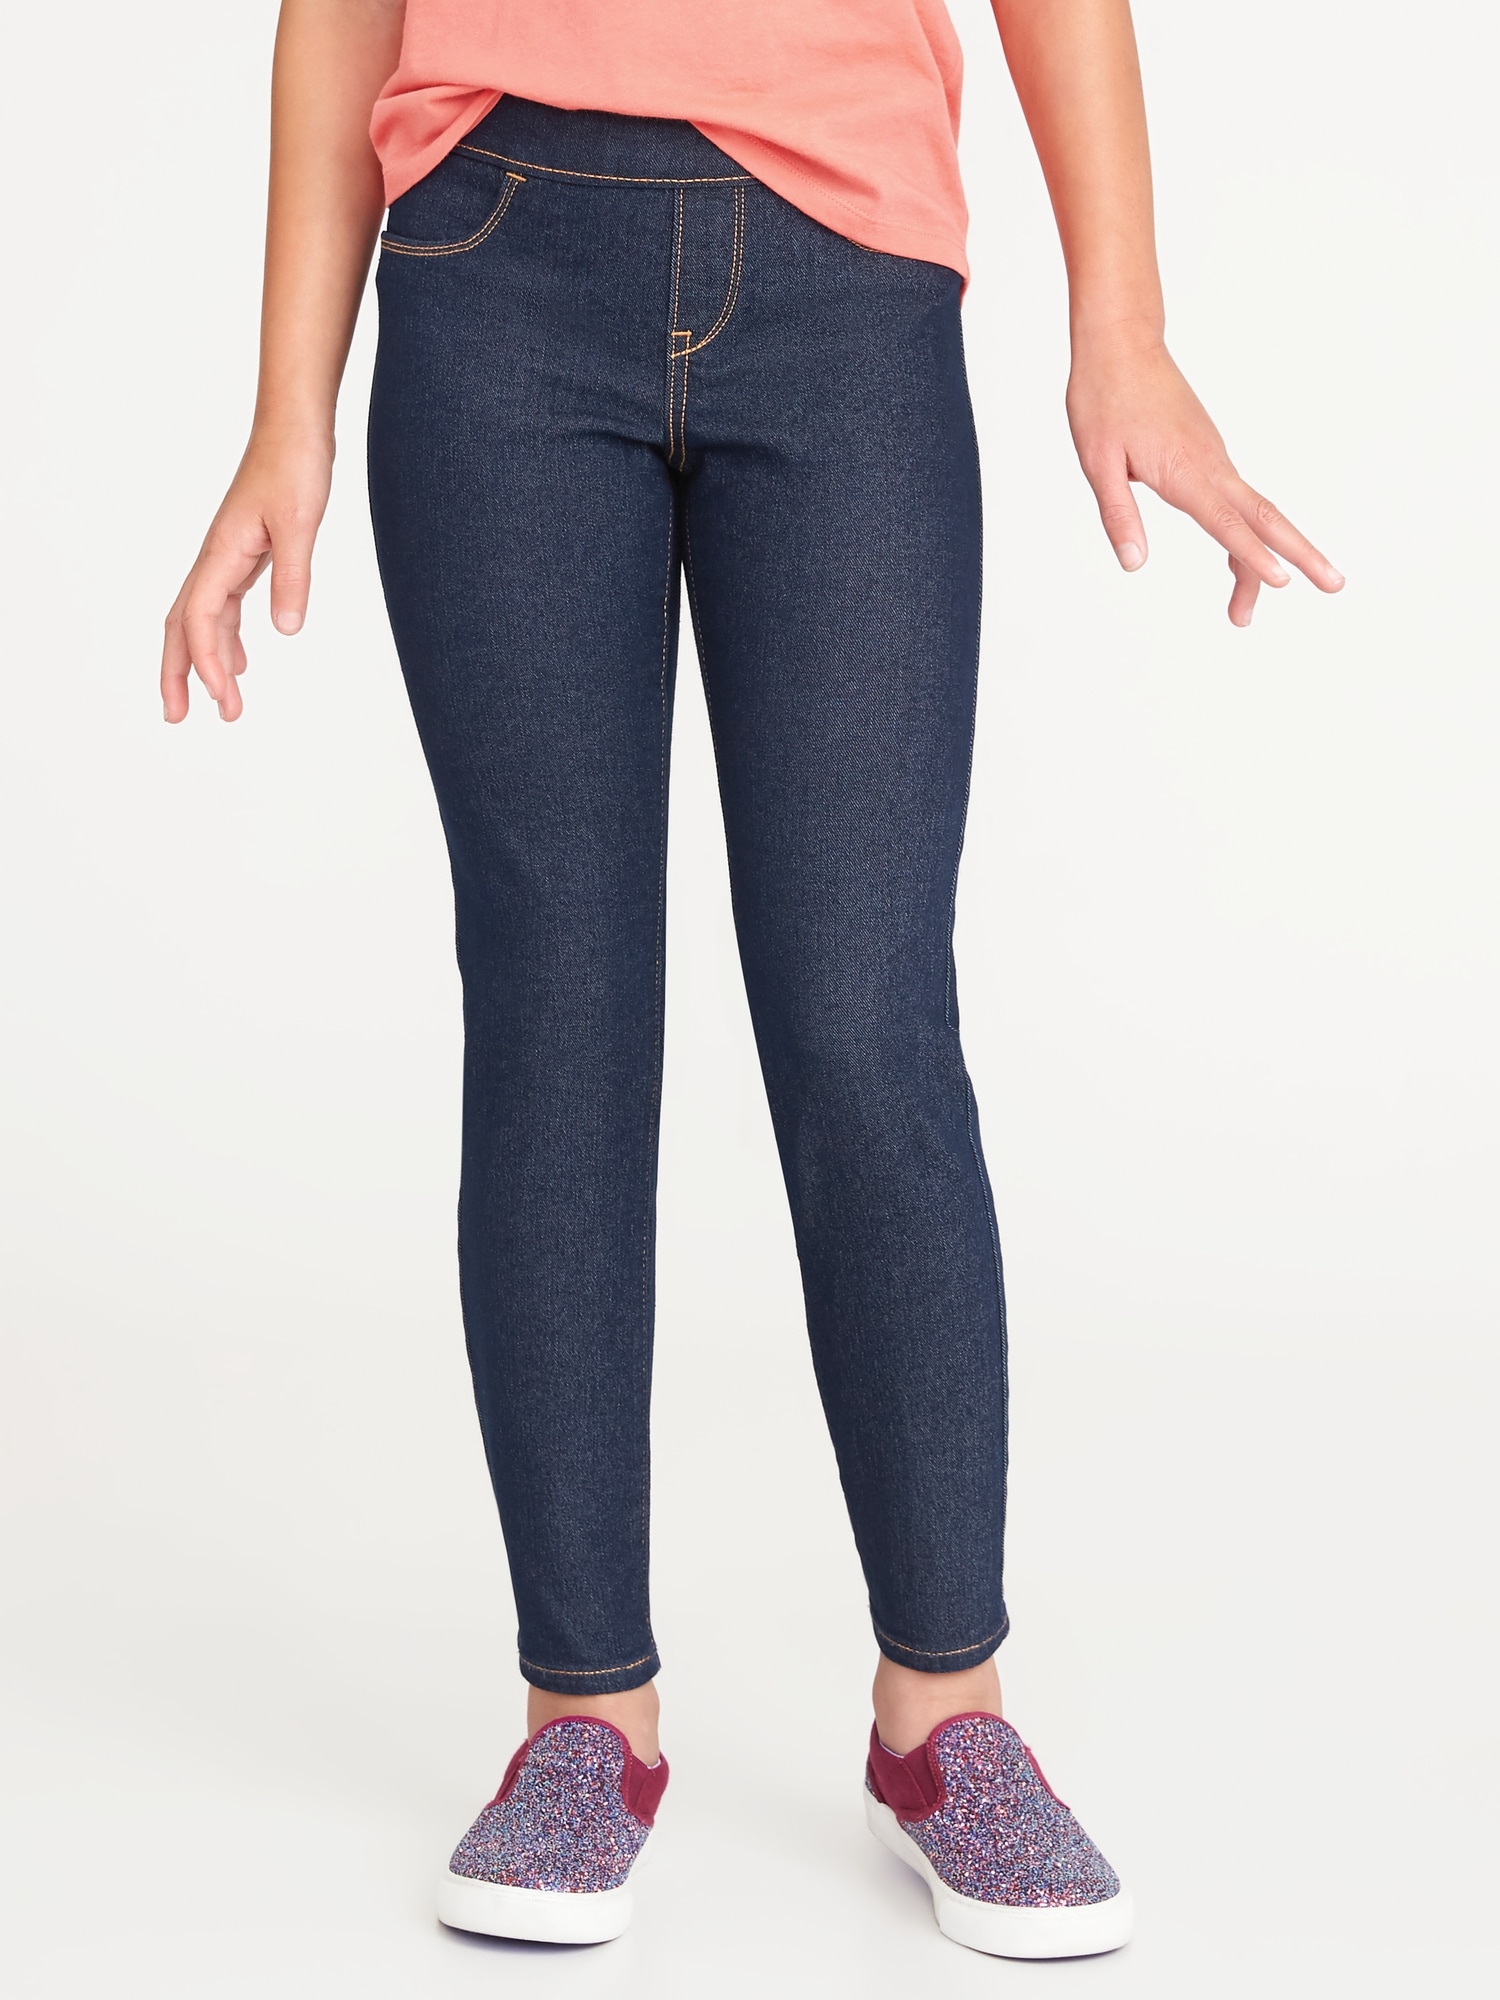 girls jeans skinny